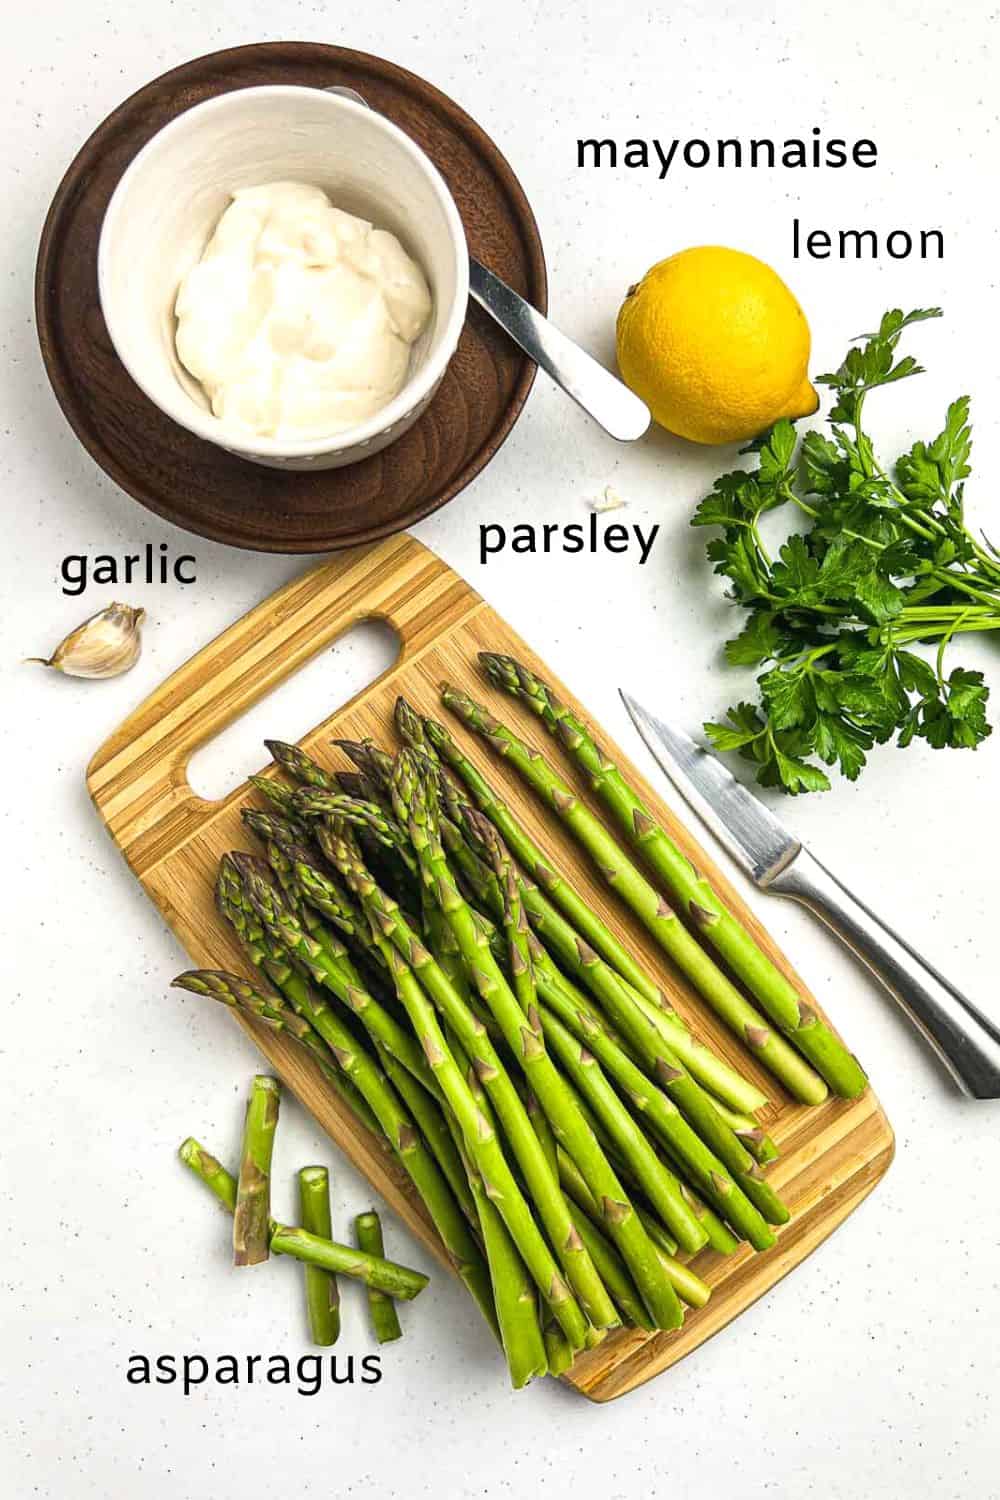 Ingredients with labels for asparagus with lemon garlic aioli: asparagus, mayonnaise, lemon, parsley, garlic, sea salt.